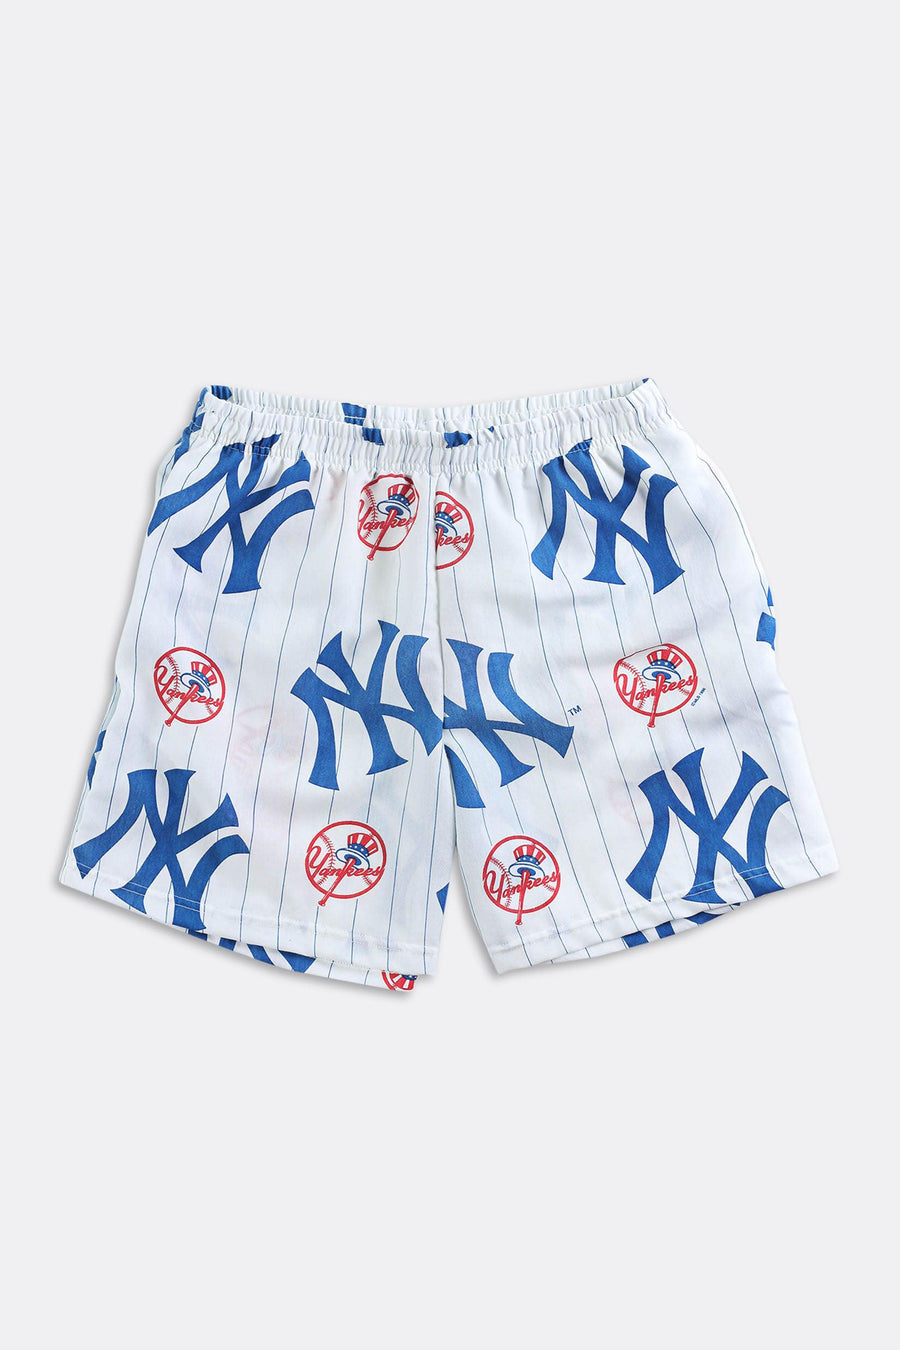 Rework New York Yankees Boy Shorts - M, L